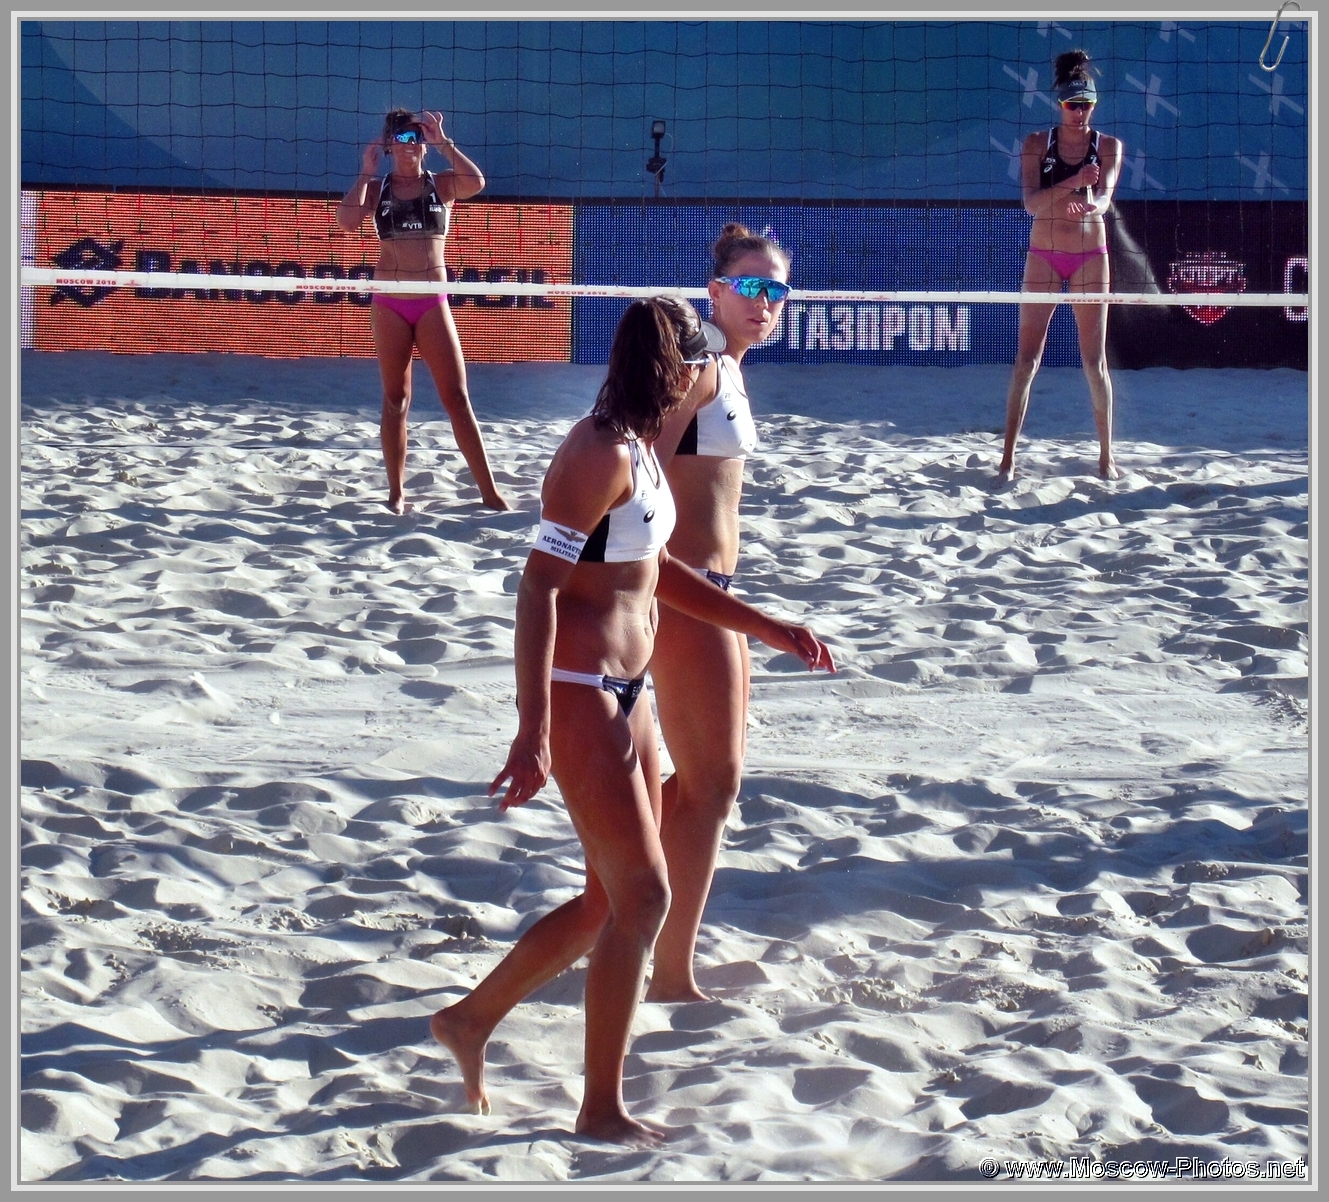 Marta Menegatti and Viktoria Orsi Toth - Italian Team at FIVB Beach Volleyball World Tour